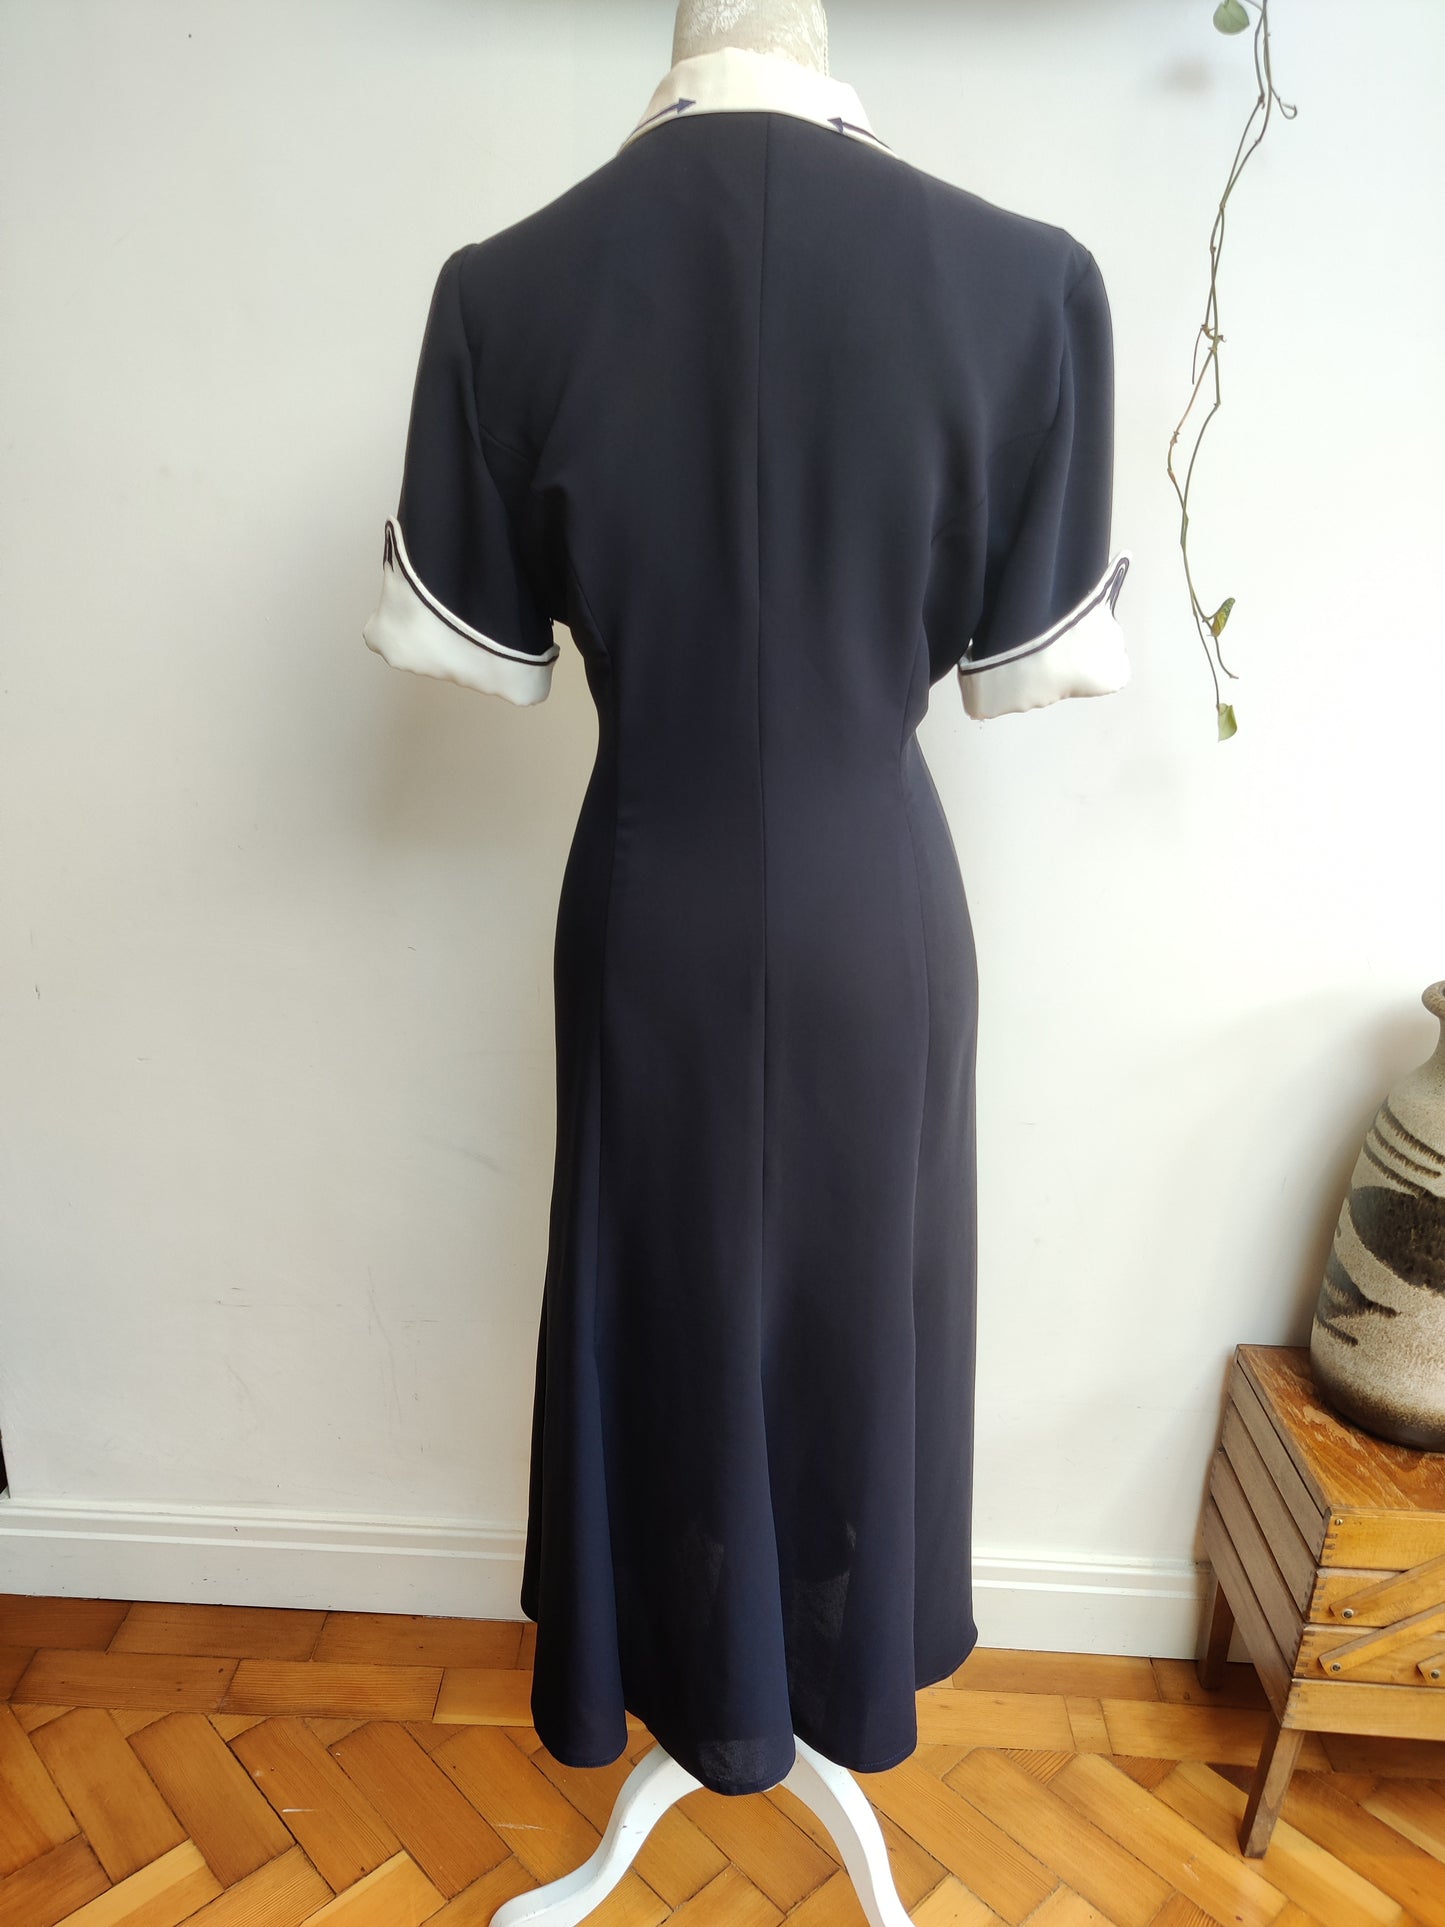 Stunning monochrome vintage midi dress size 14-16